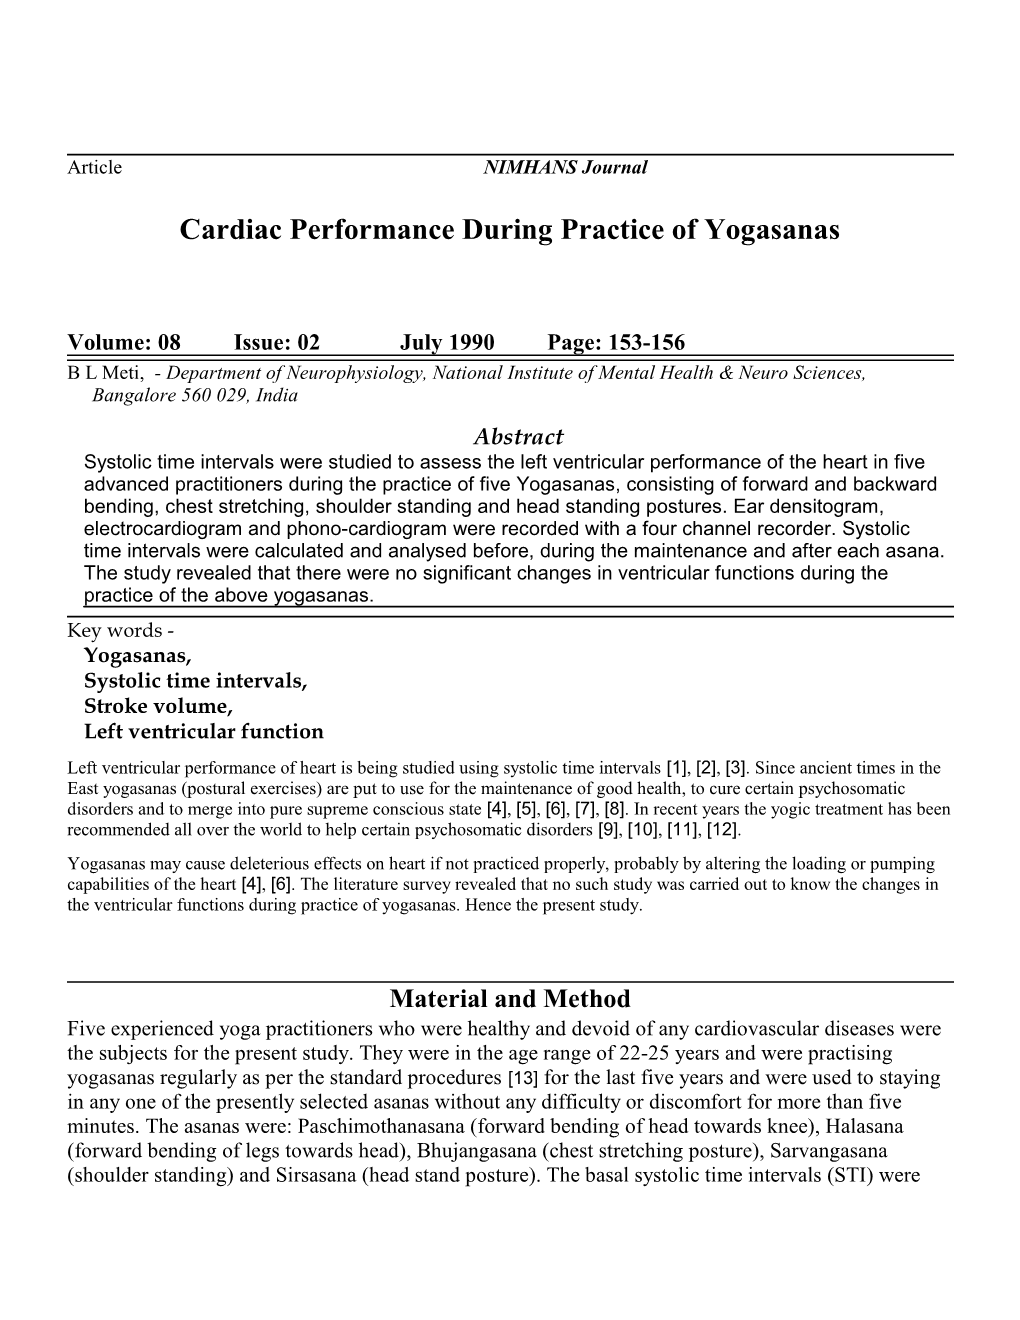 Cardiac Performance During Practice of Yogasanas